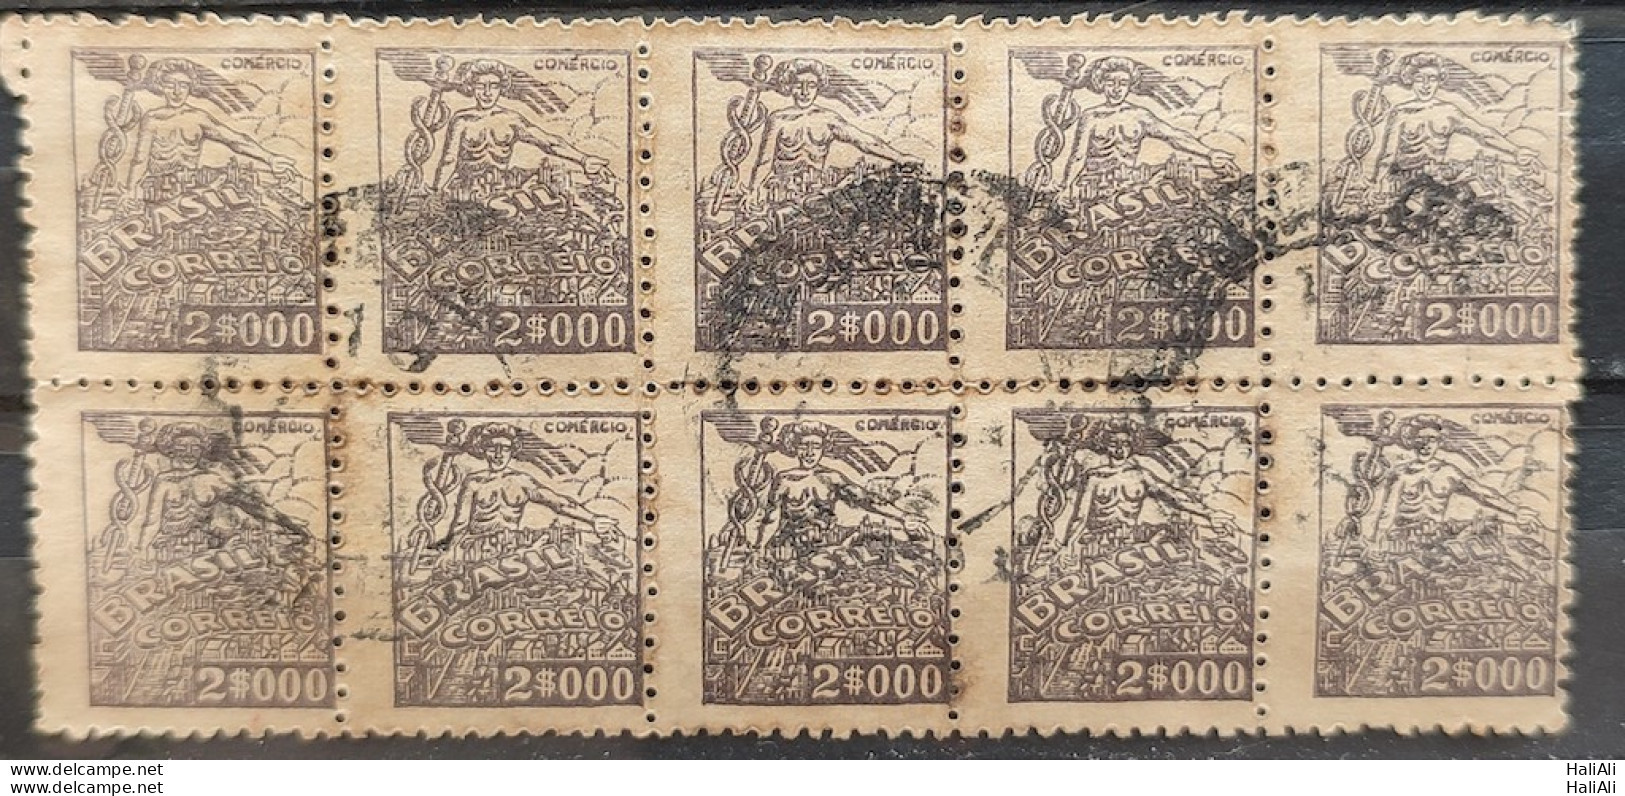 Brazil Regular Stamp RHM 381 Granddaughter Commerce 2000 Reis Filigree Q 1943 Circulated 27 10 Unidades - Gebruikt